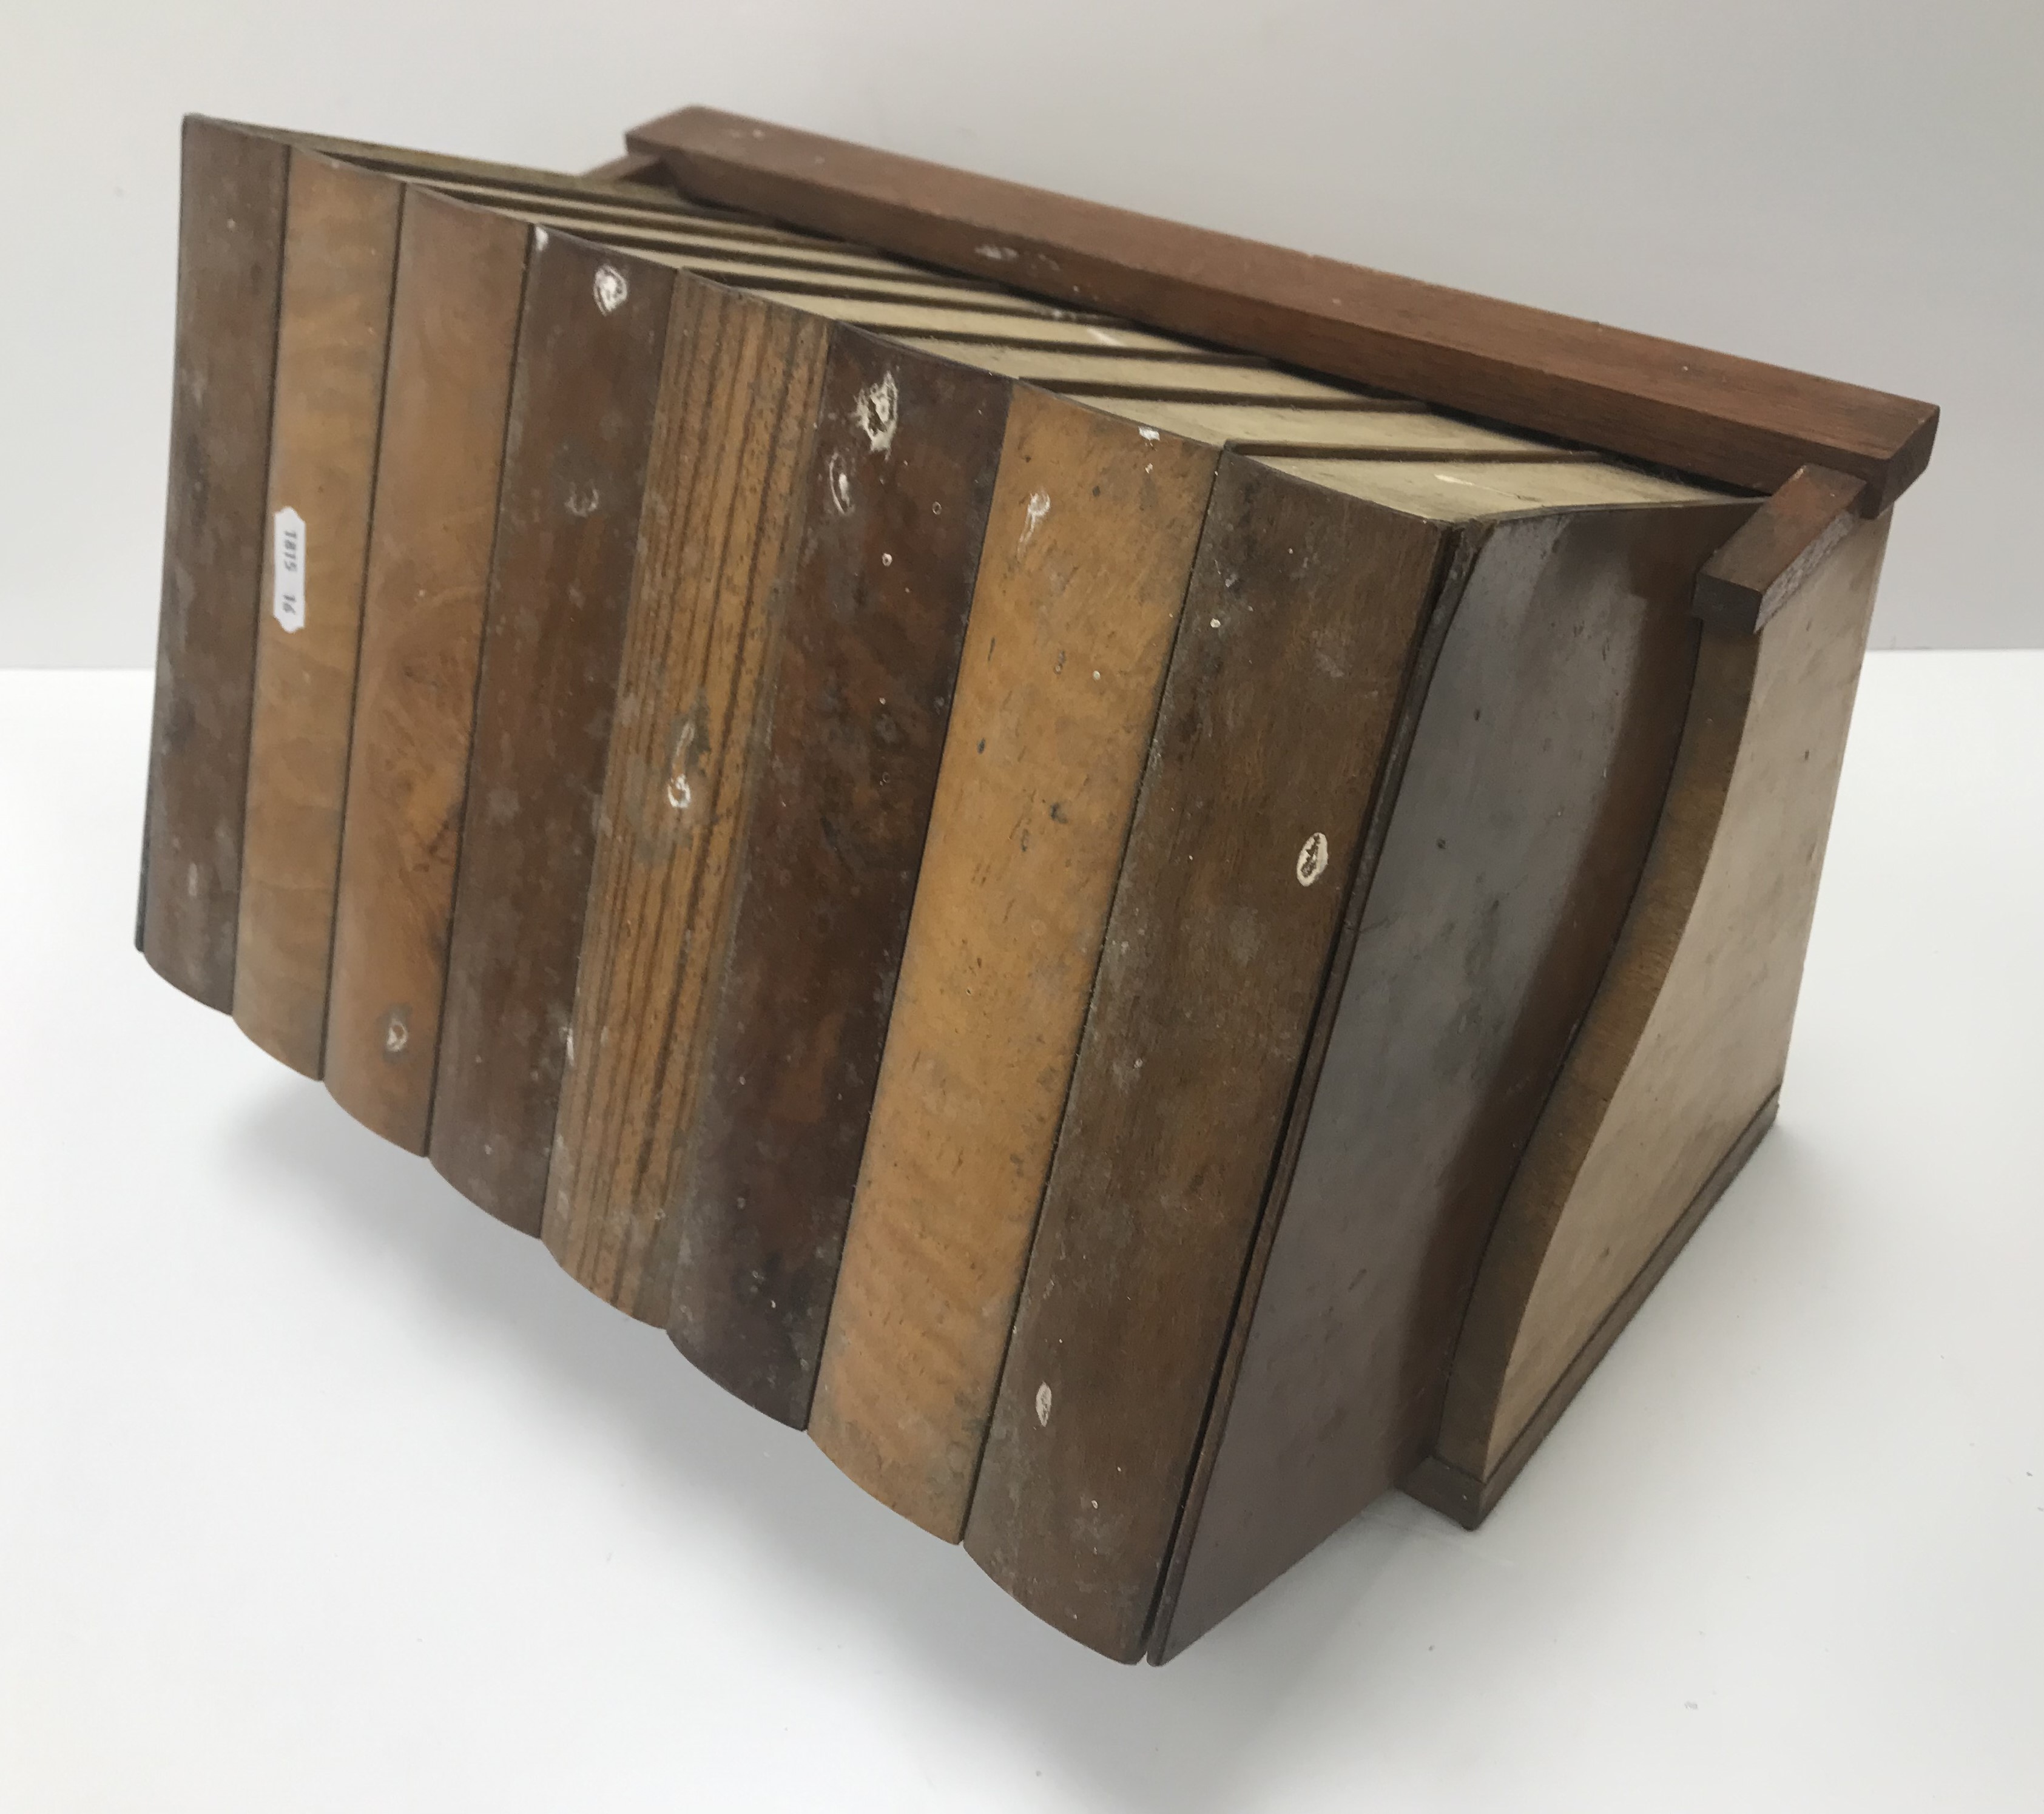 A circa 1900 sample wood box as a trough of eight books, 34.5 cm wide x 23.